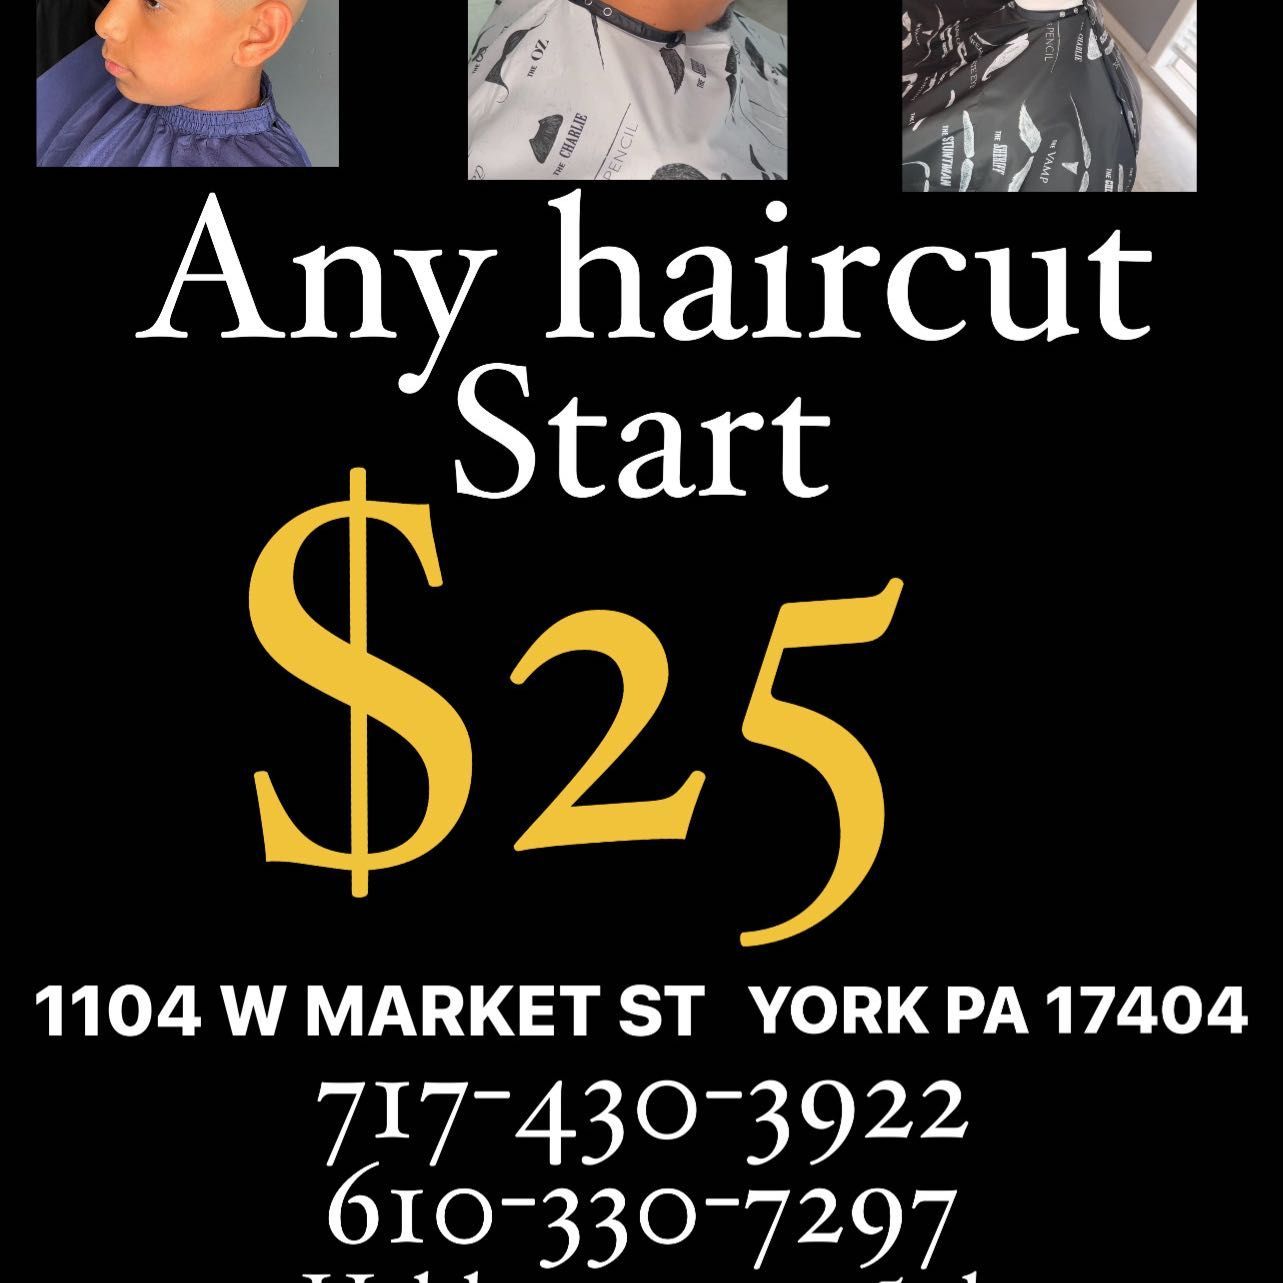 J💈J Barber Shop, 1104 W MARKET ST YORK PA, 7174303922, York, 17404